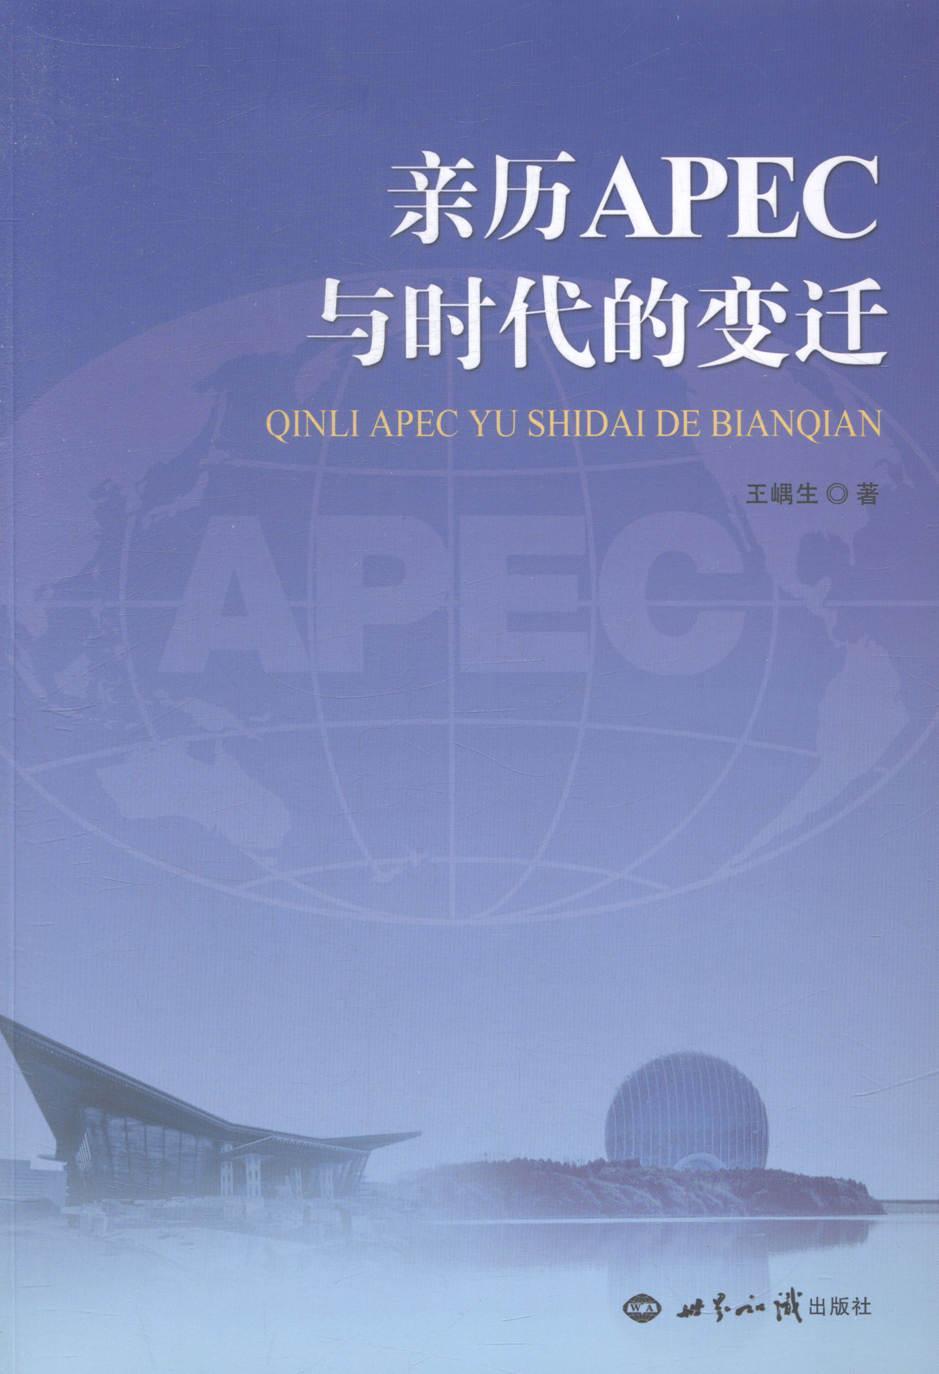 [rt] 亲历APEC与时代的变迁  王嵎生  世界知识出版社  经济  区域经济组织基本知识亚太地区